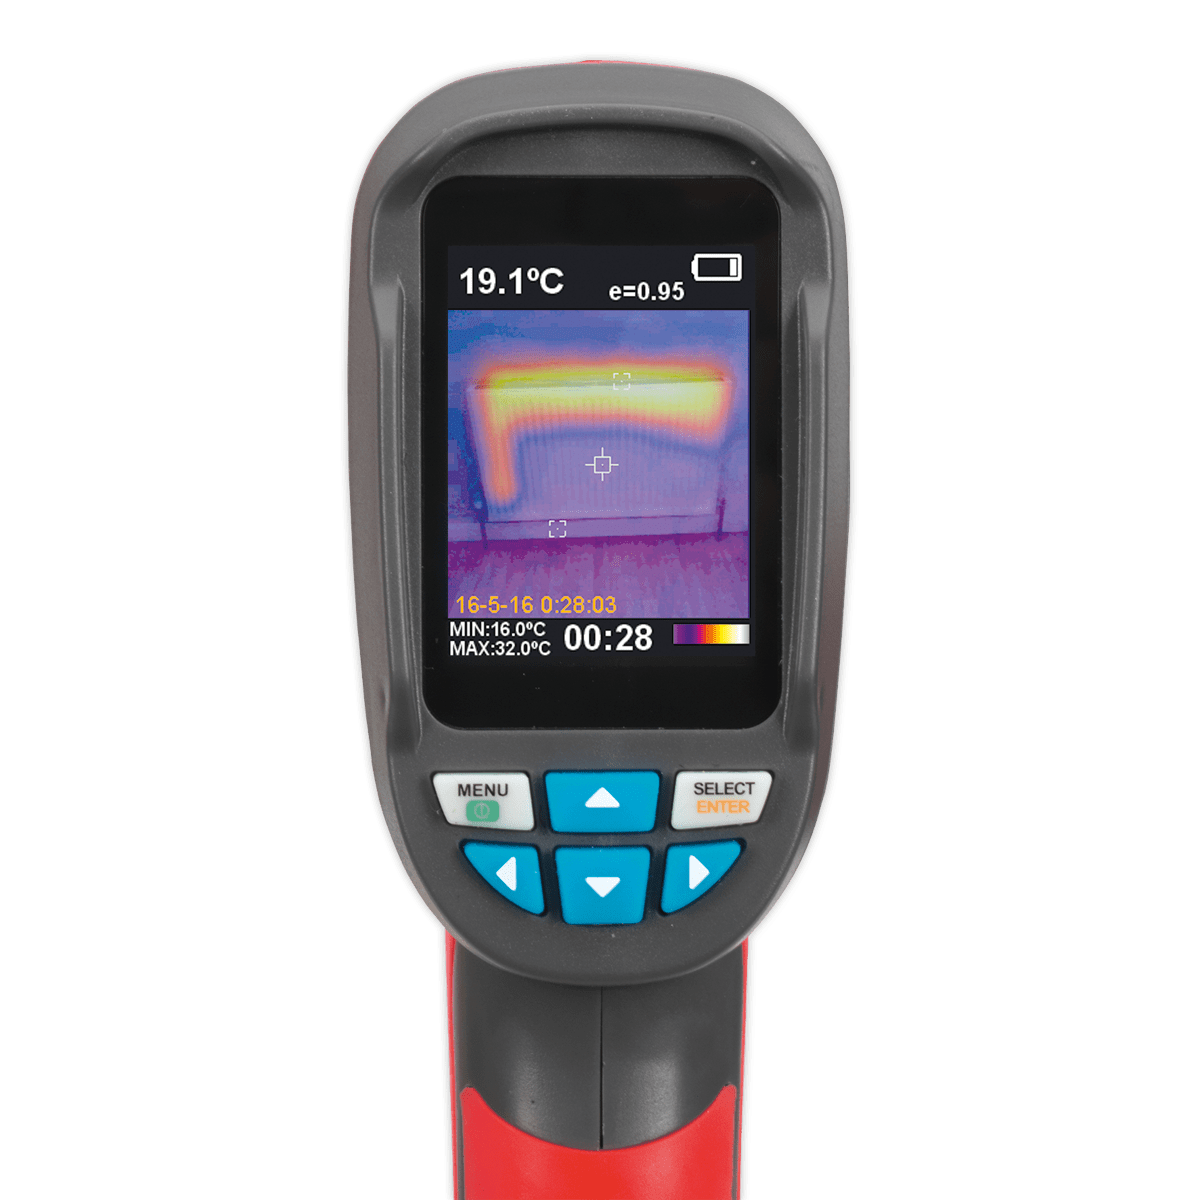 Sealey Thermal Imaging Camera VS912